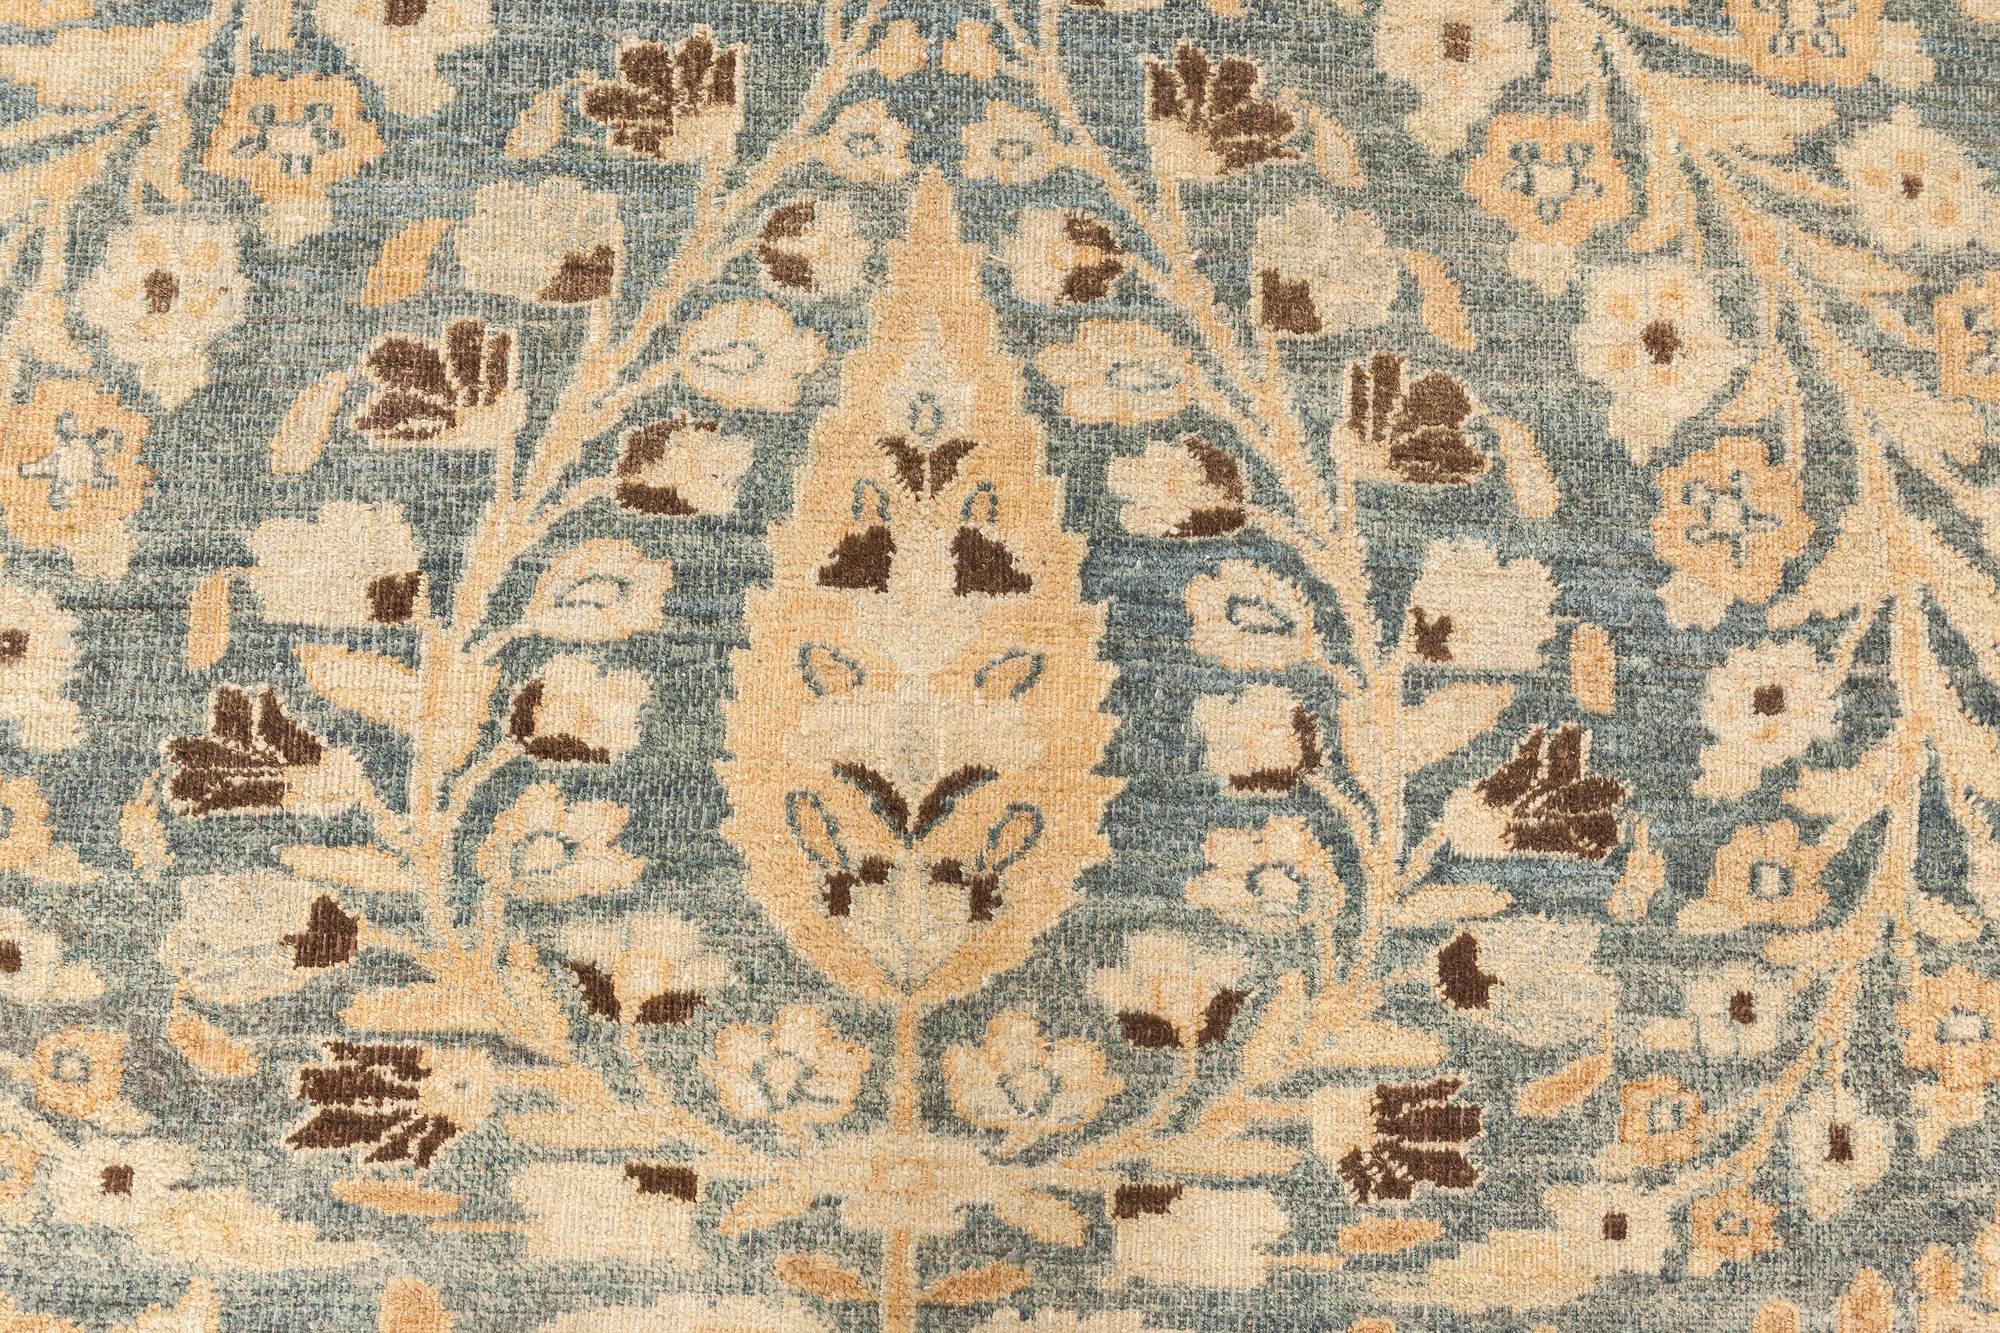 Antique Persian Khorassan Botanic Handmade Wool rug
Size: 12'5